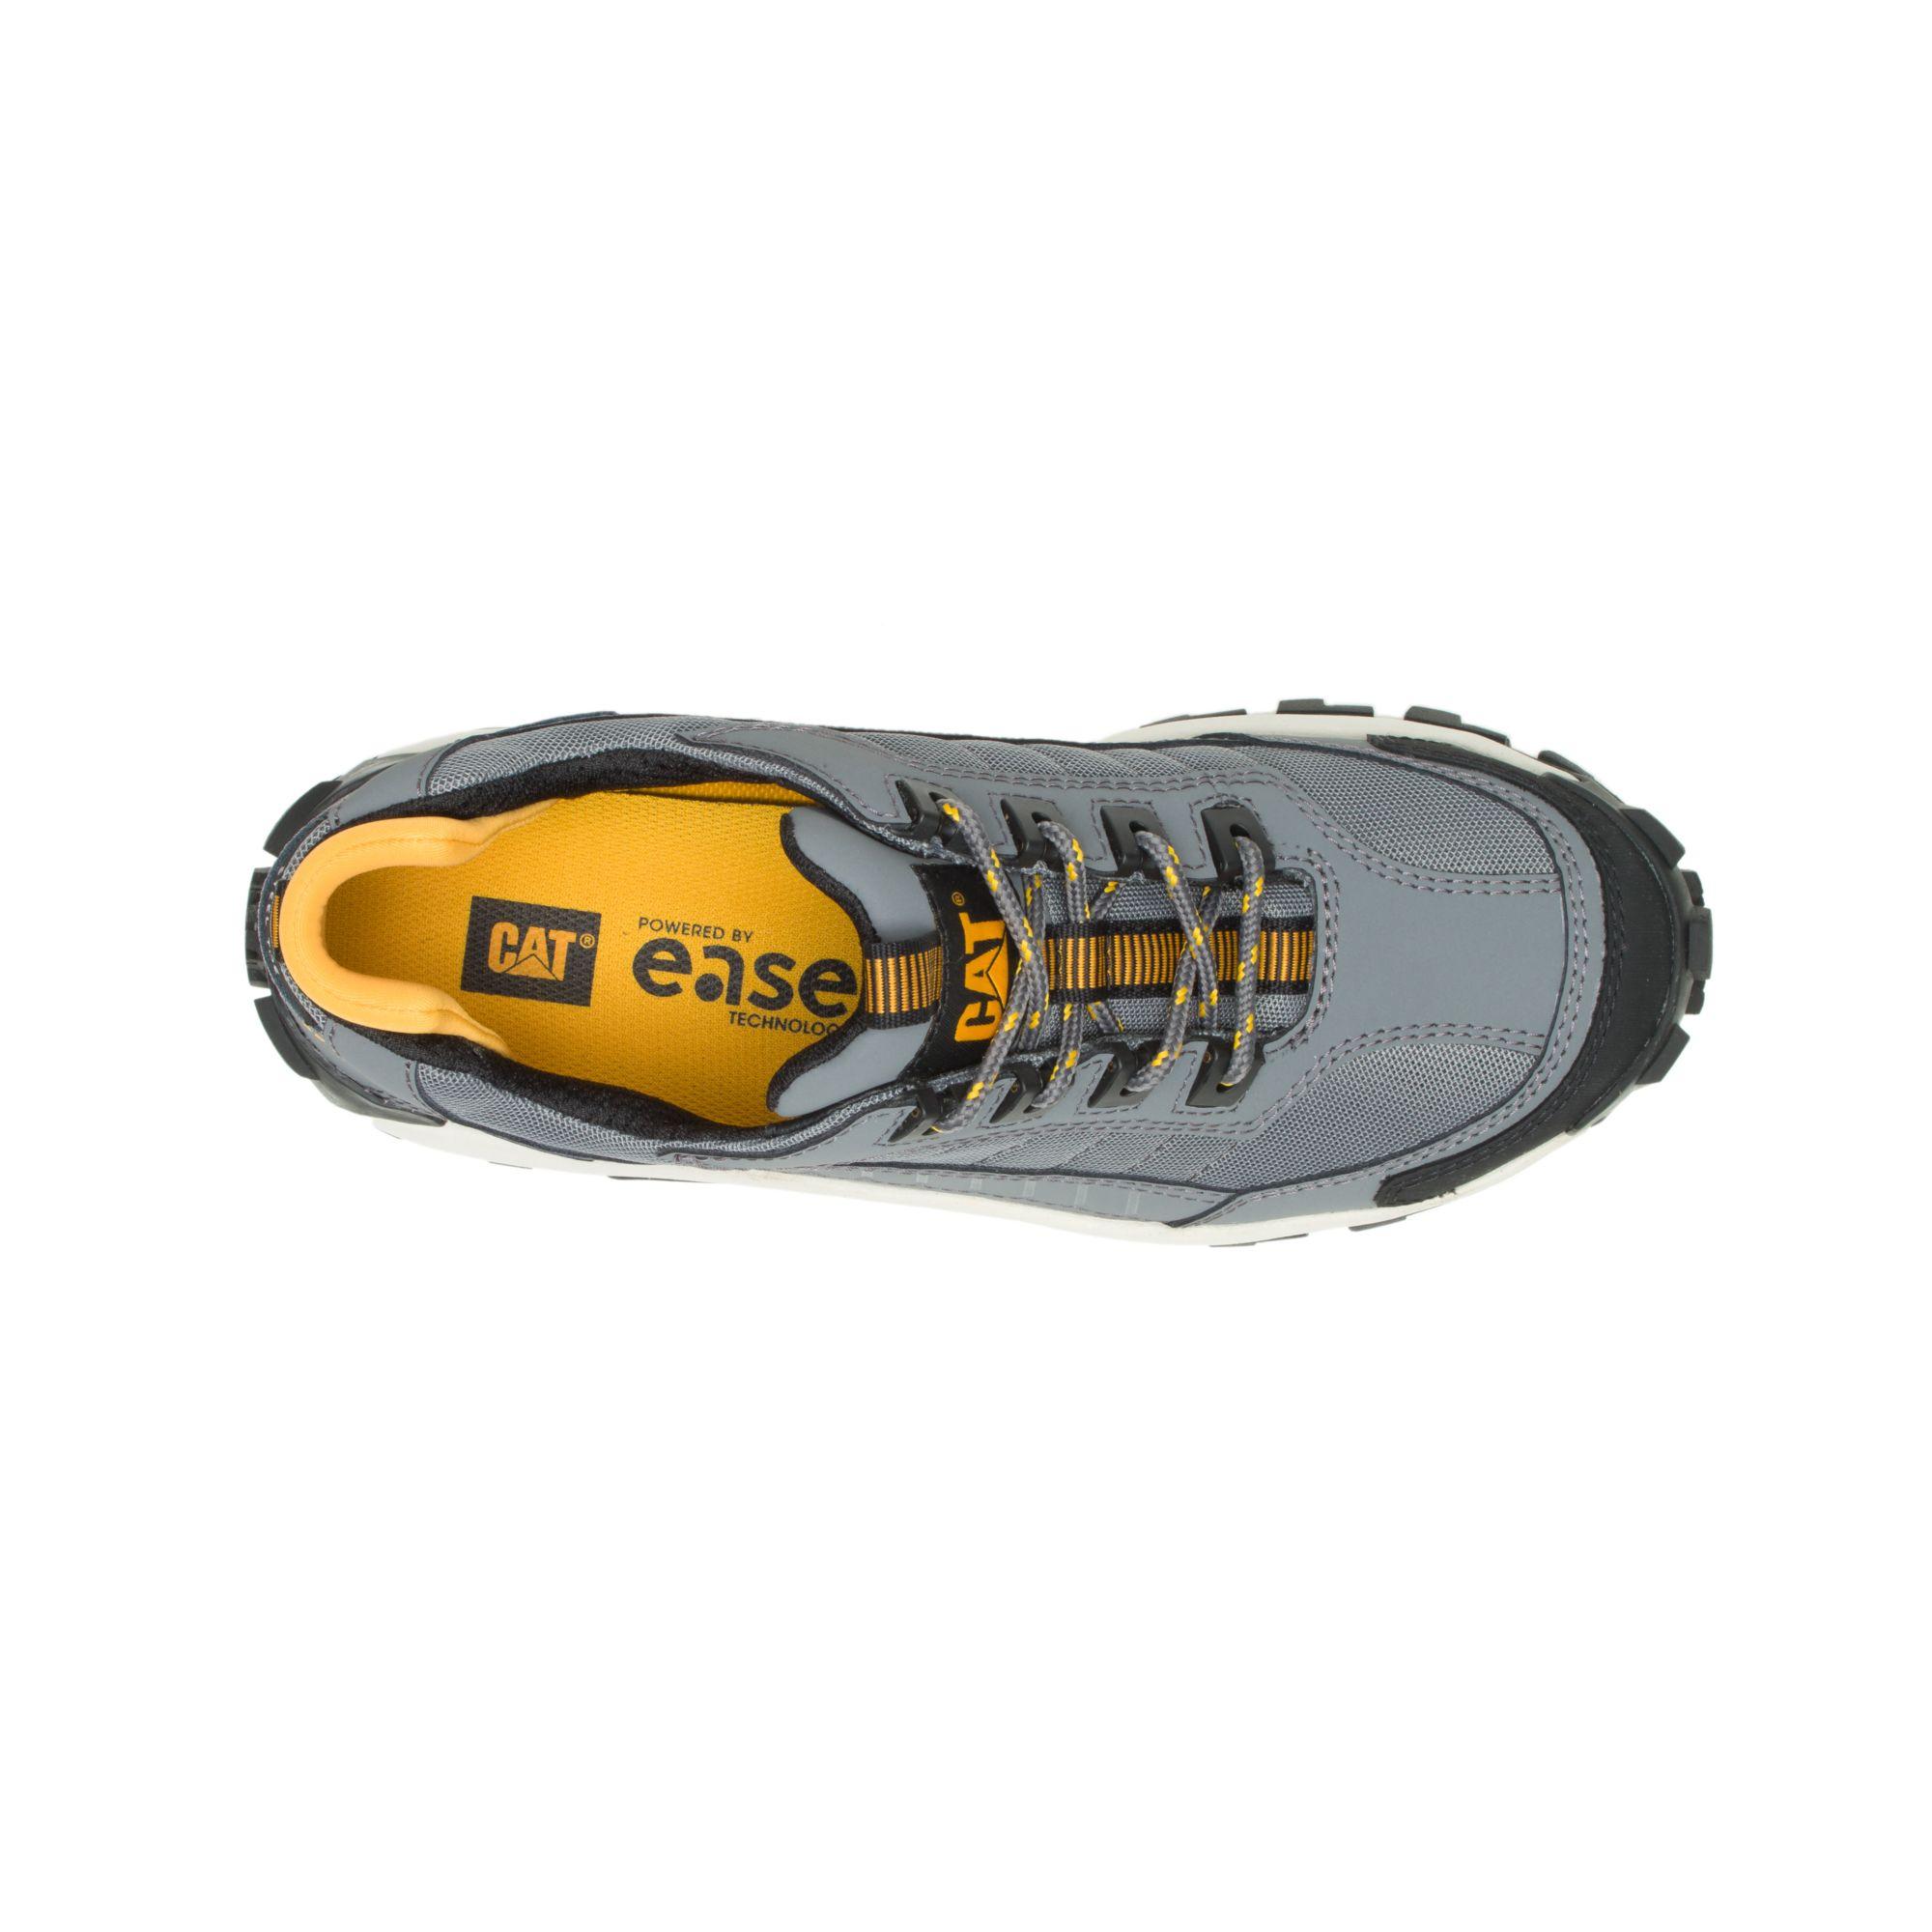 Caterpillar Erpillar Invader Steel Toe Work Shoe Gargoyle for Men | Lyst